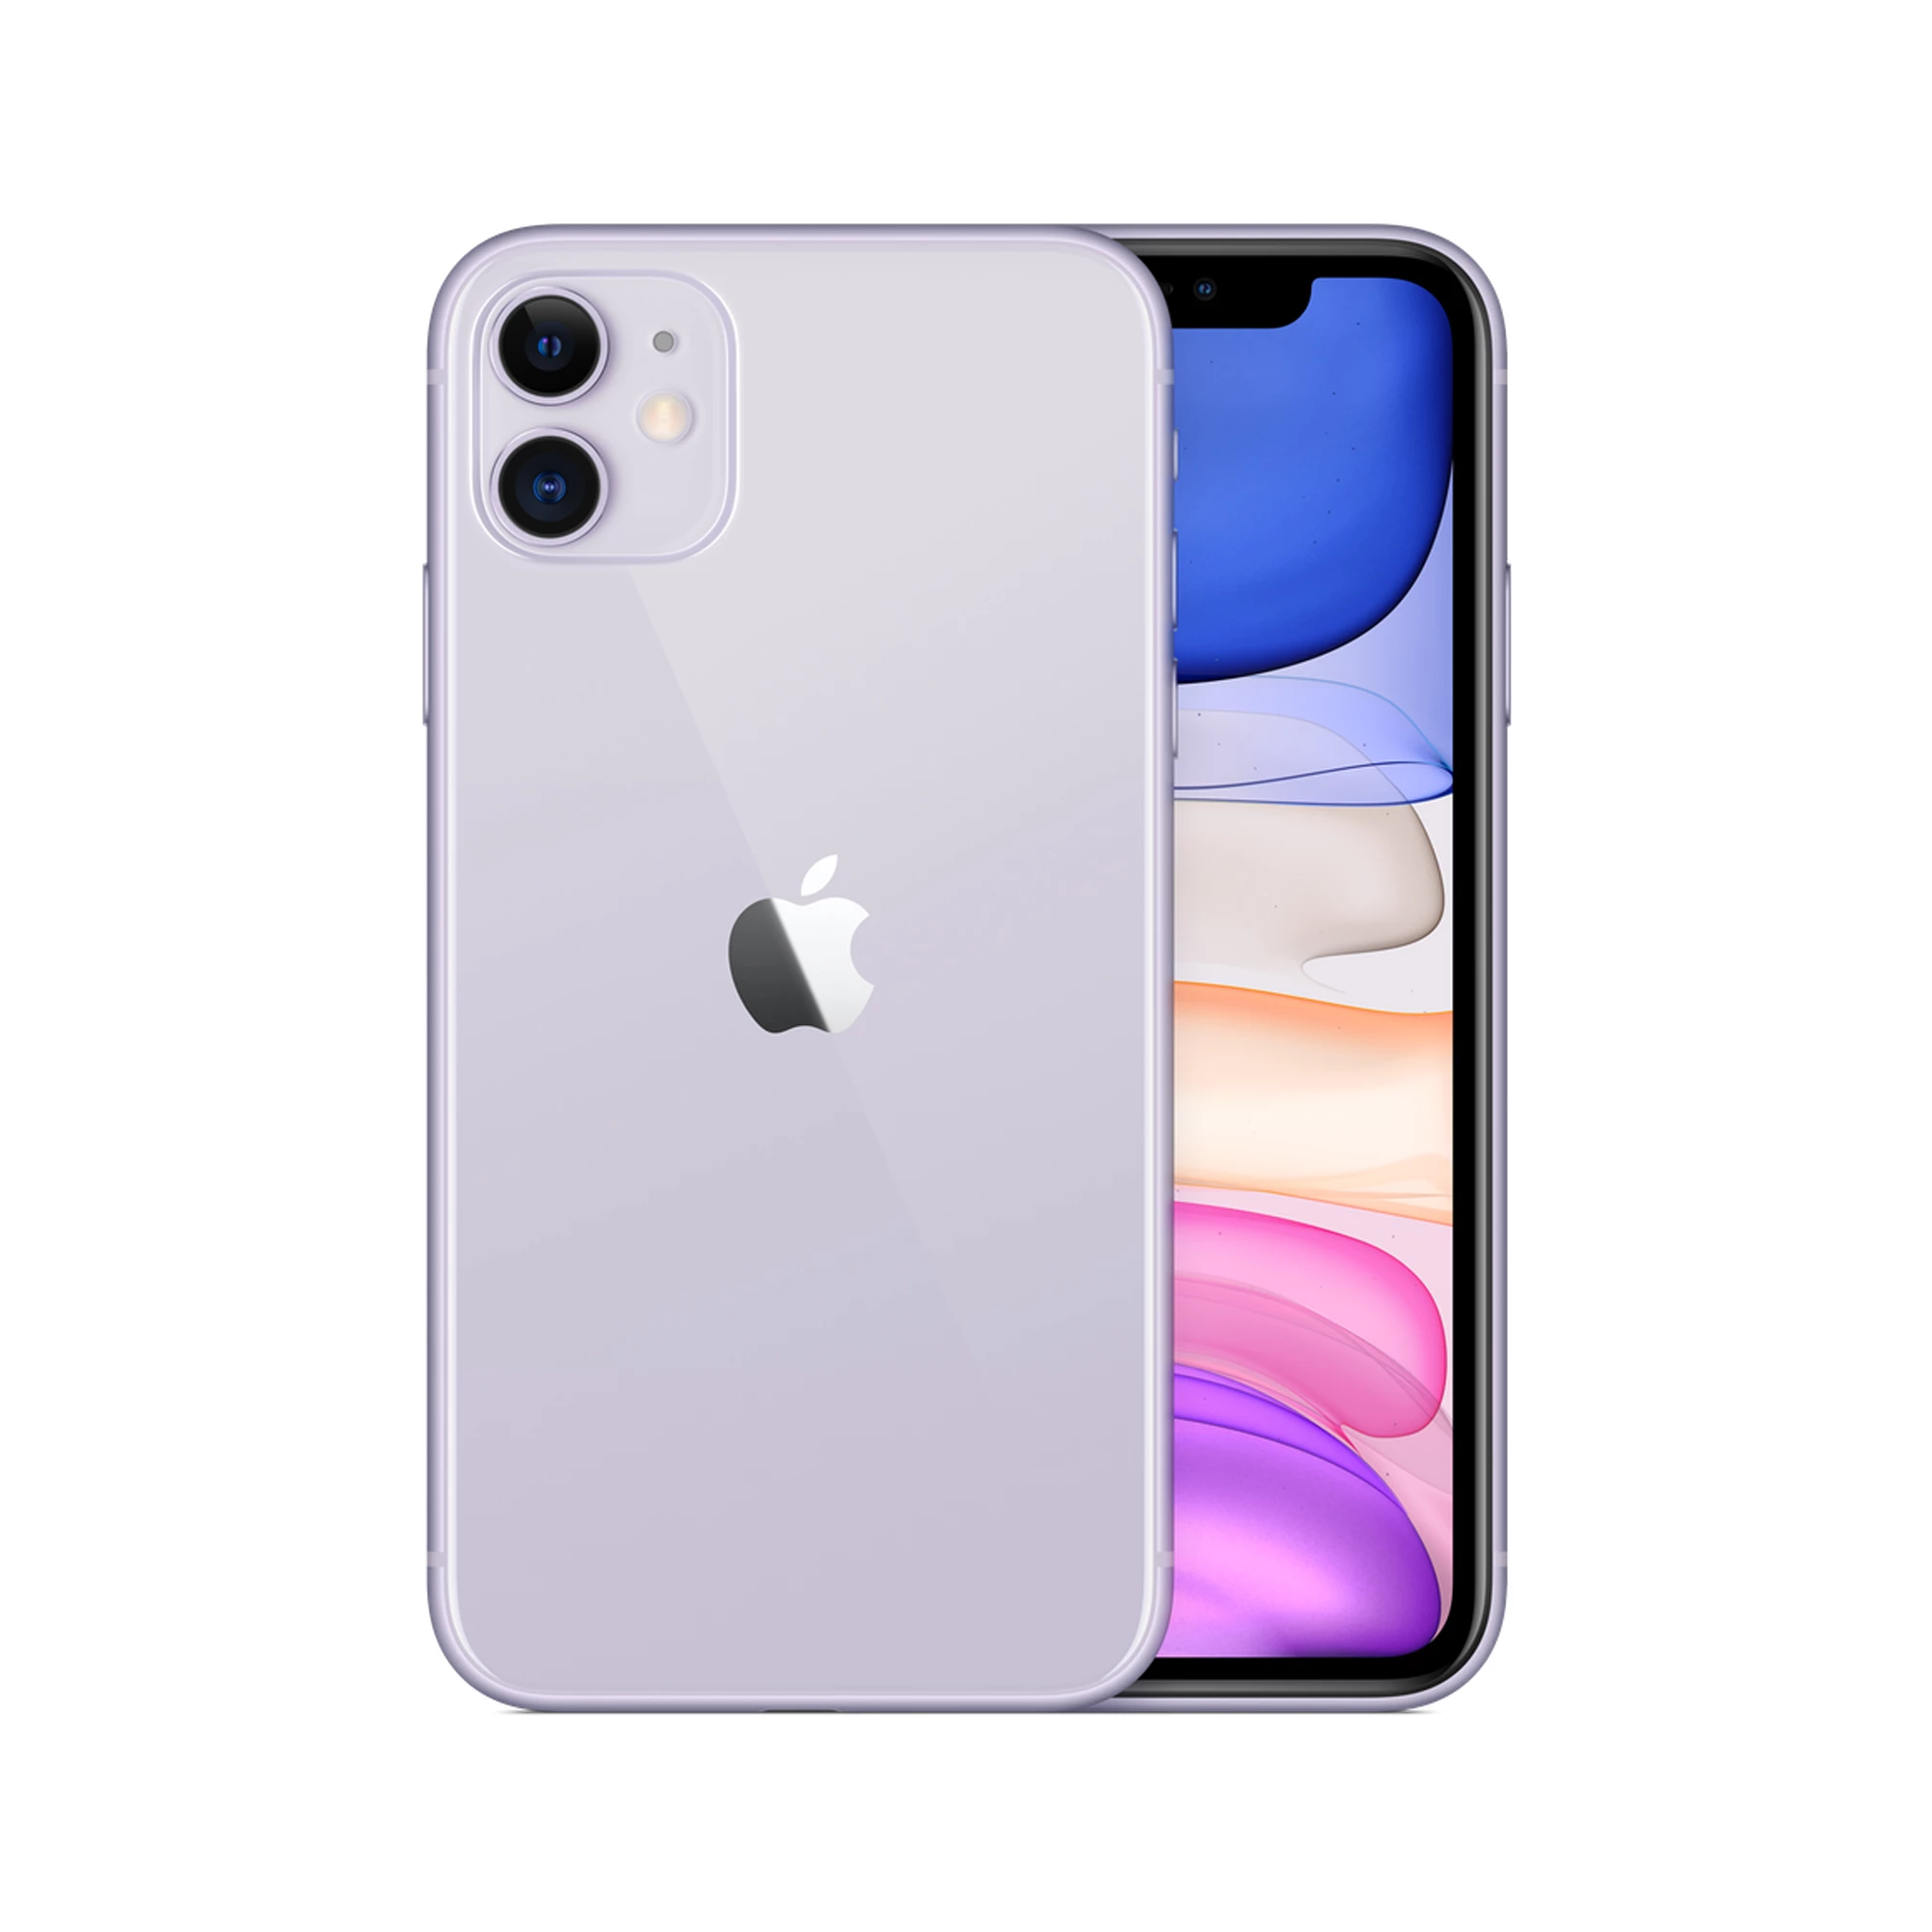 Apple iPhone 11 128GB Purple (MWLJ2) Full Box